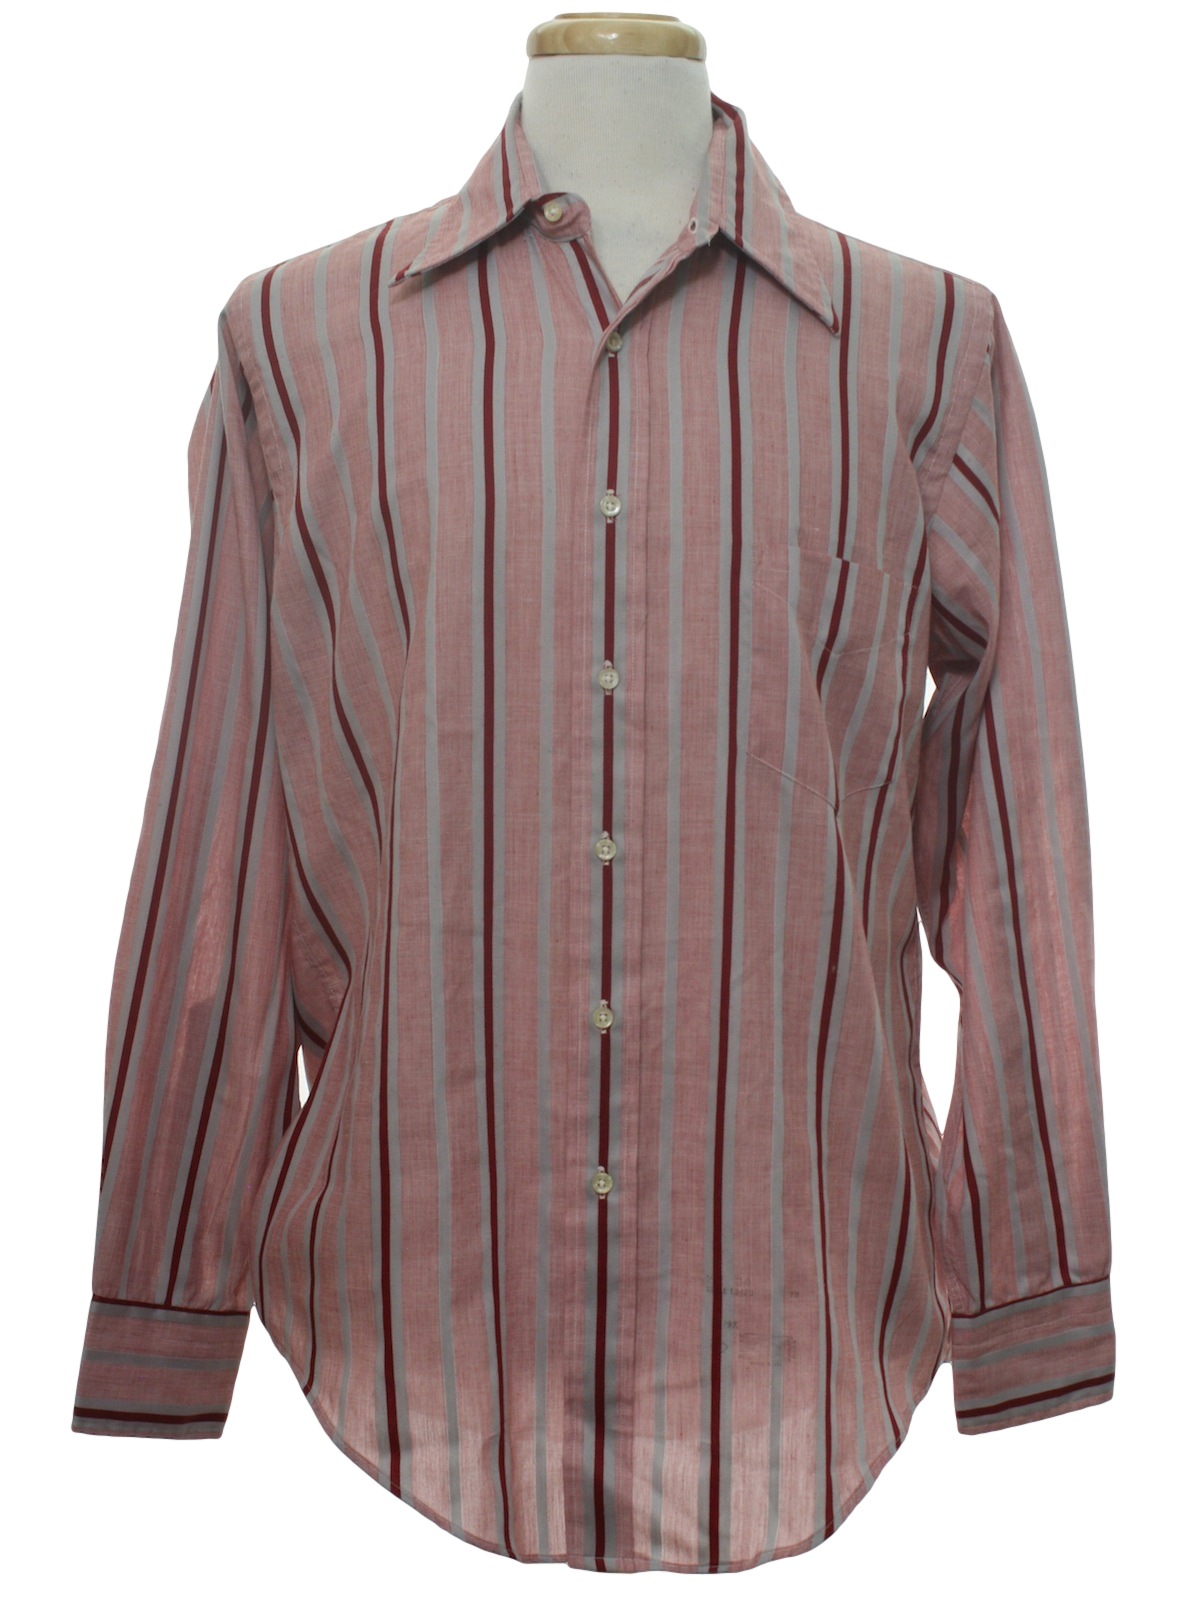 Retro 1970s Shirt: 70s -Gant Shirt Makers- Mens shaded red and grey ...